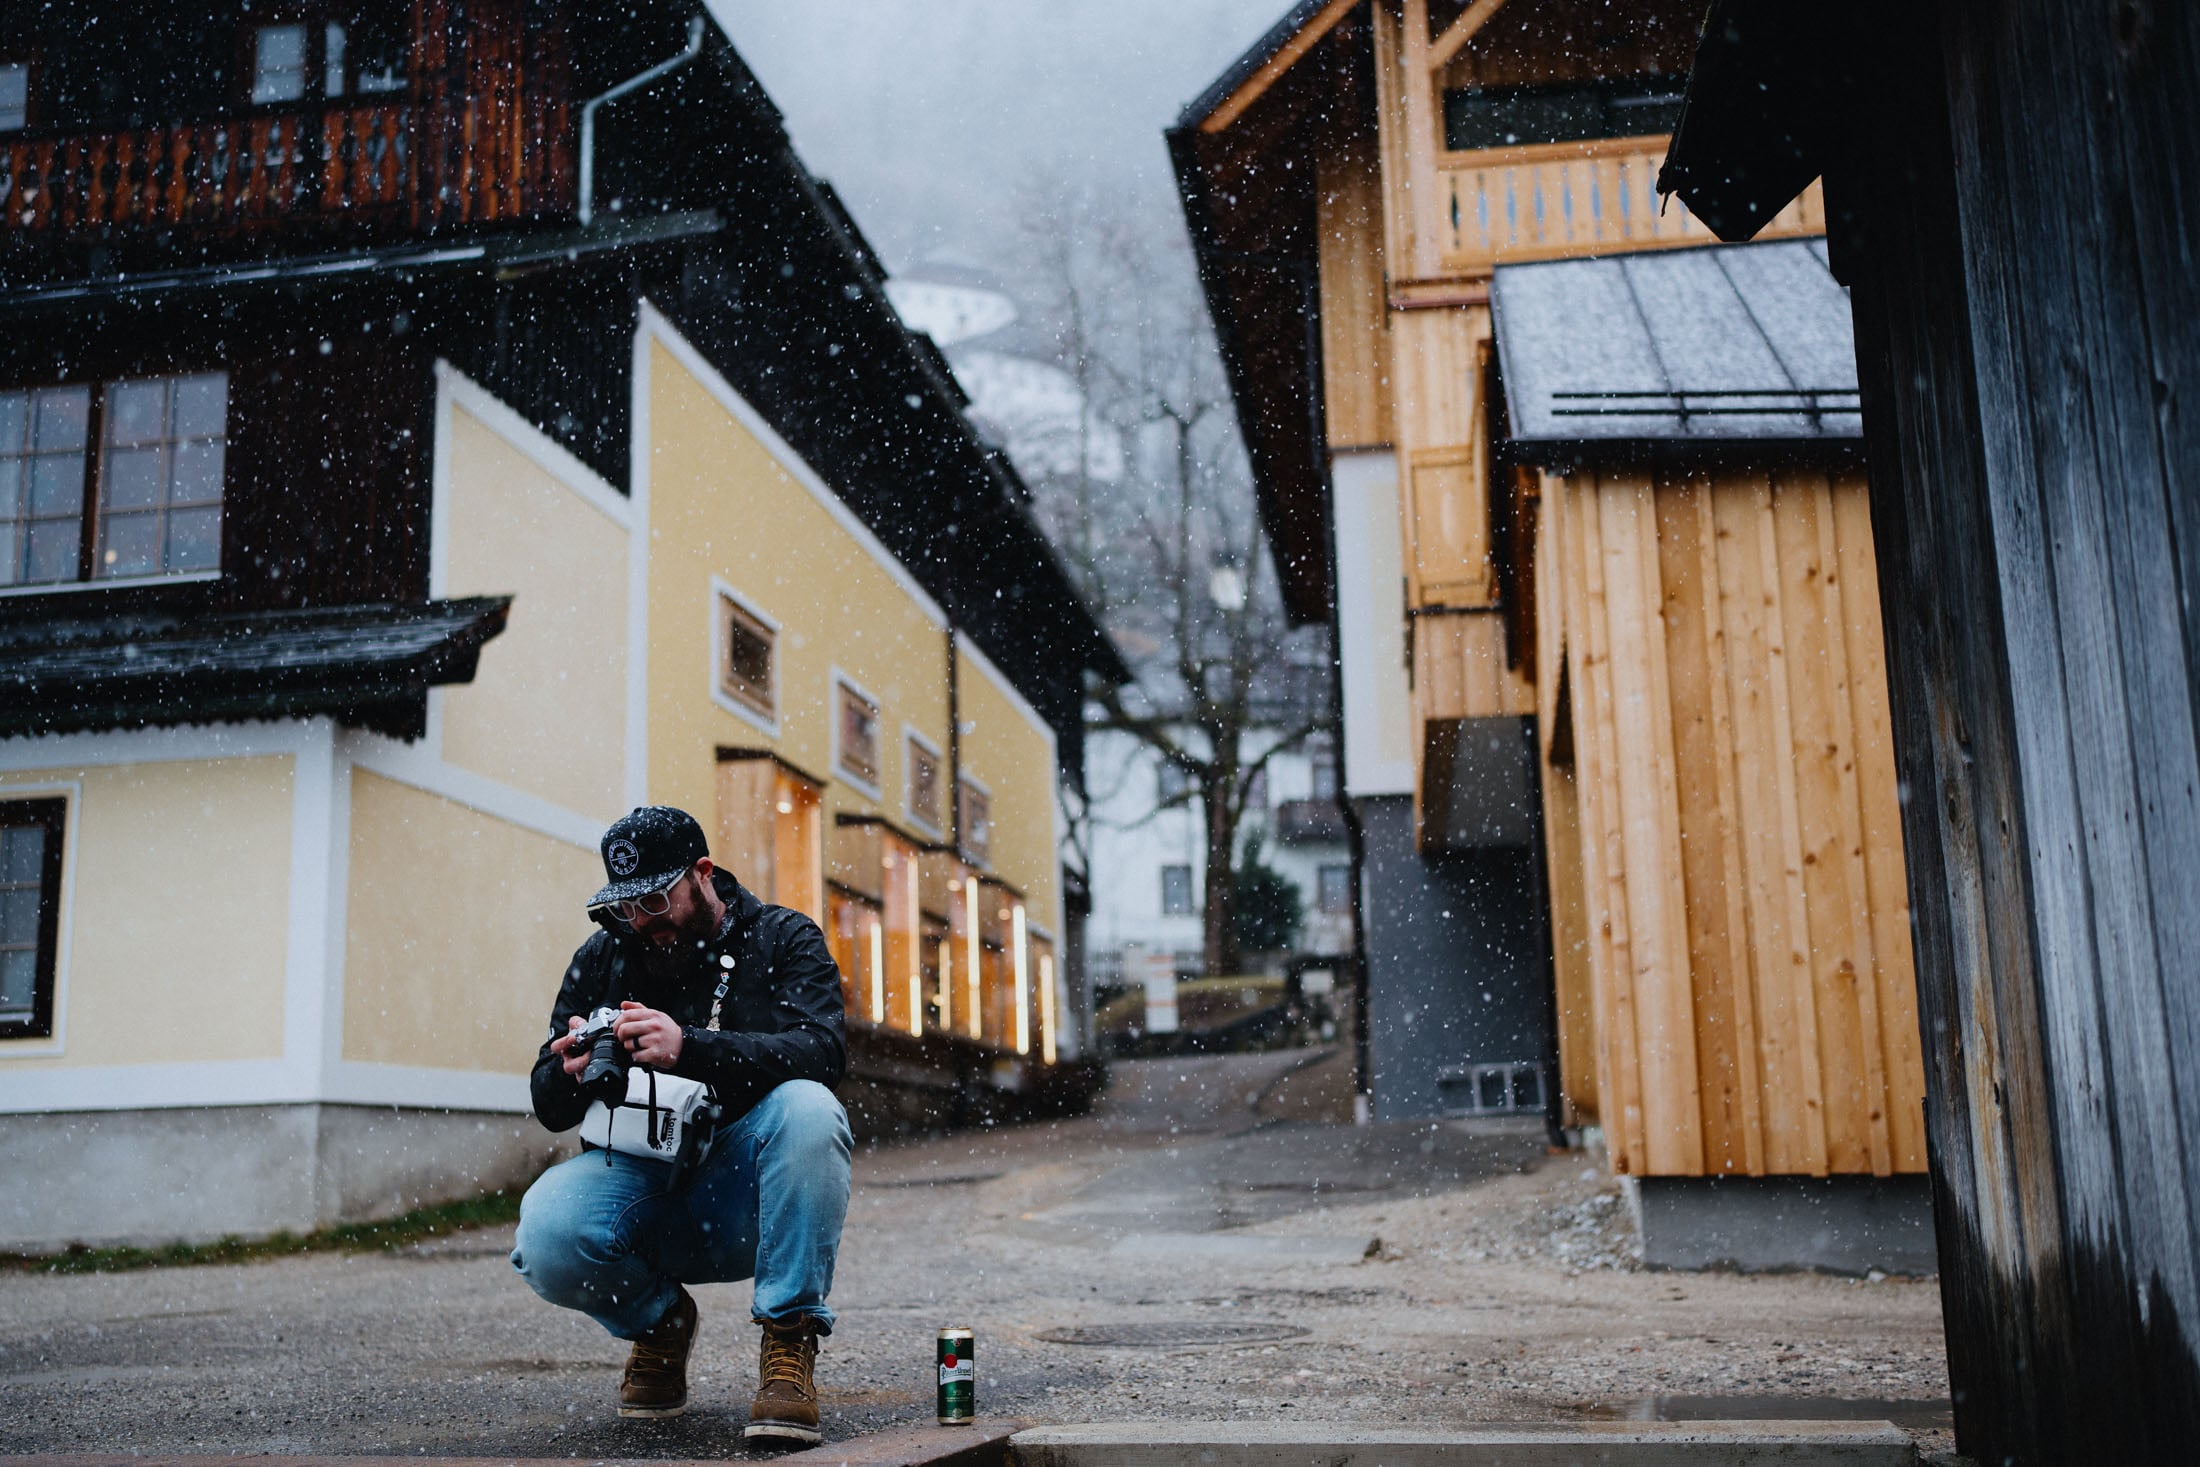 Jeff Golenski looks at his camera as it snows on a street in Halstatt Austria